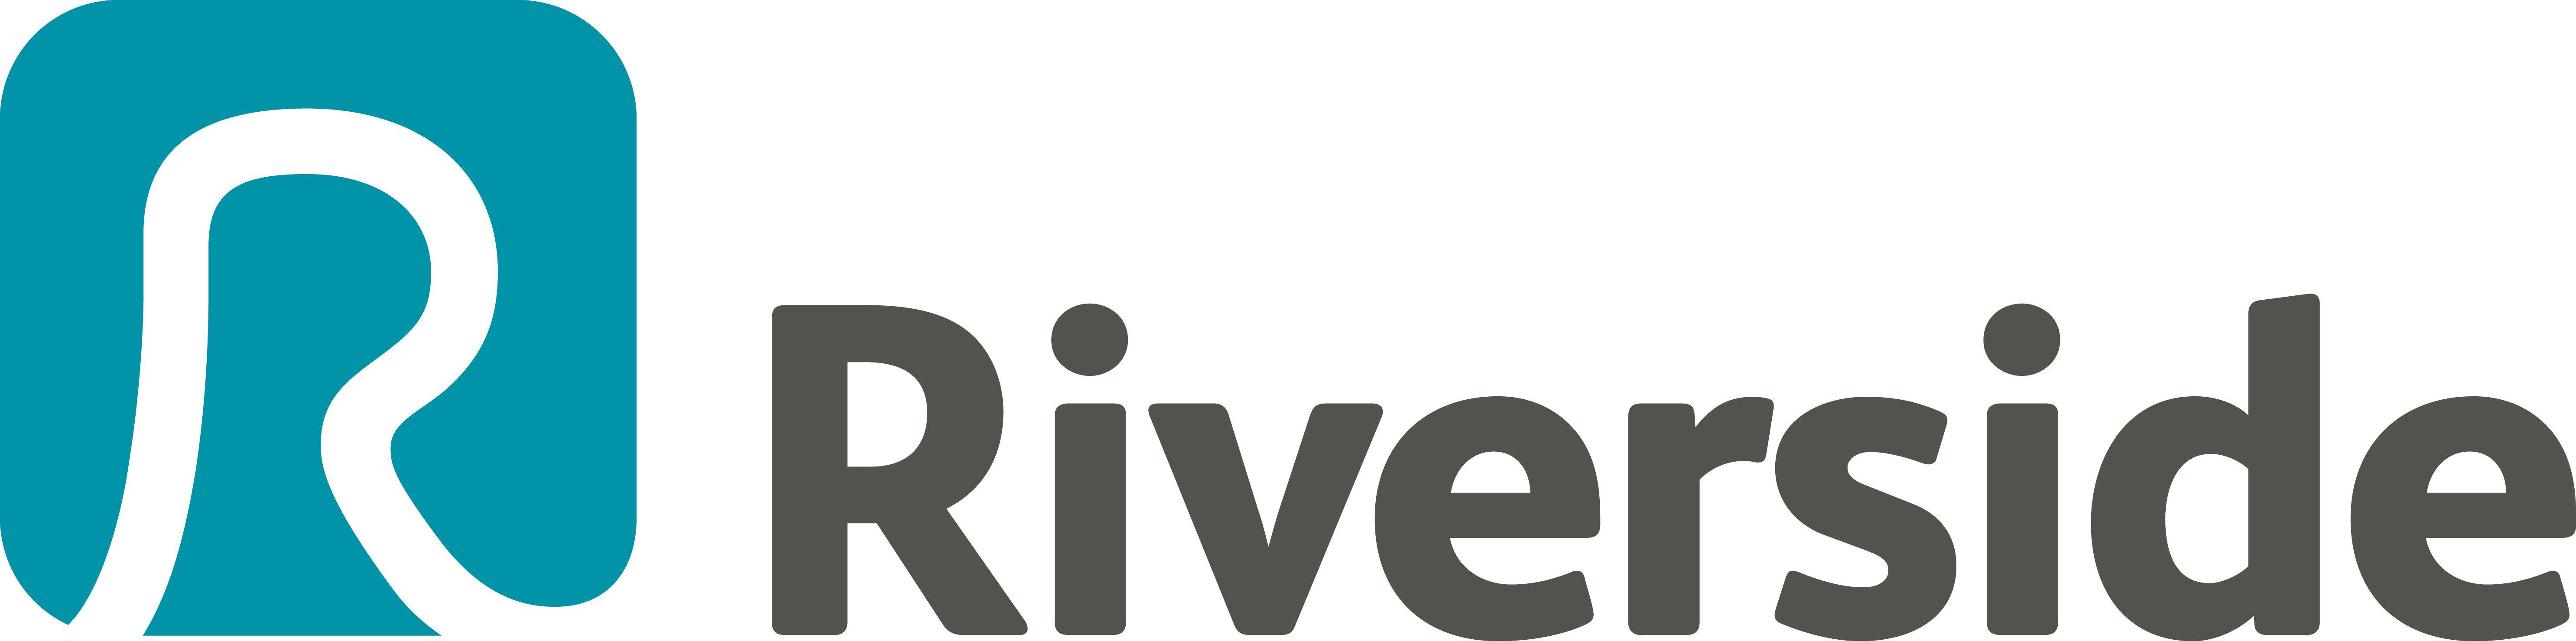 Riverside Logo - Riverside. Hull City Council